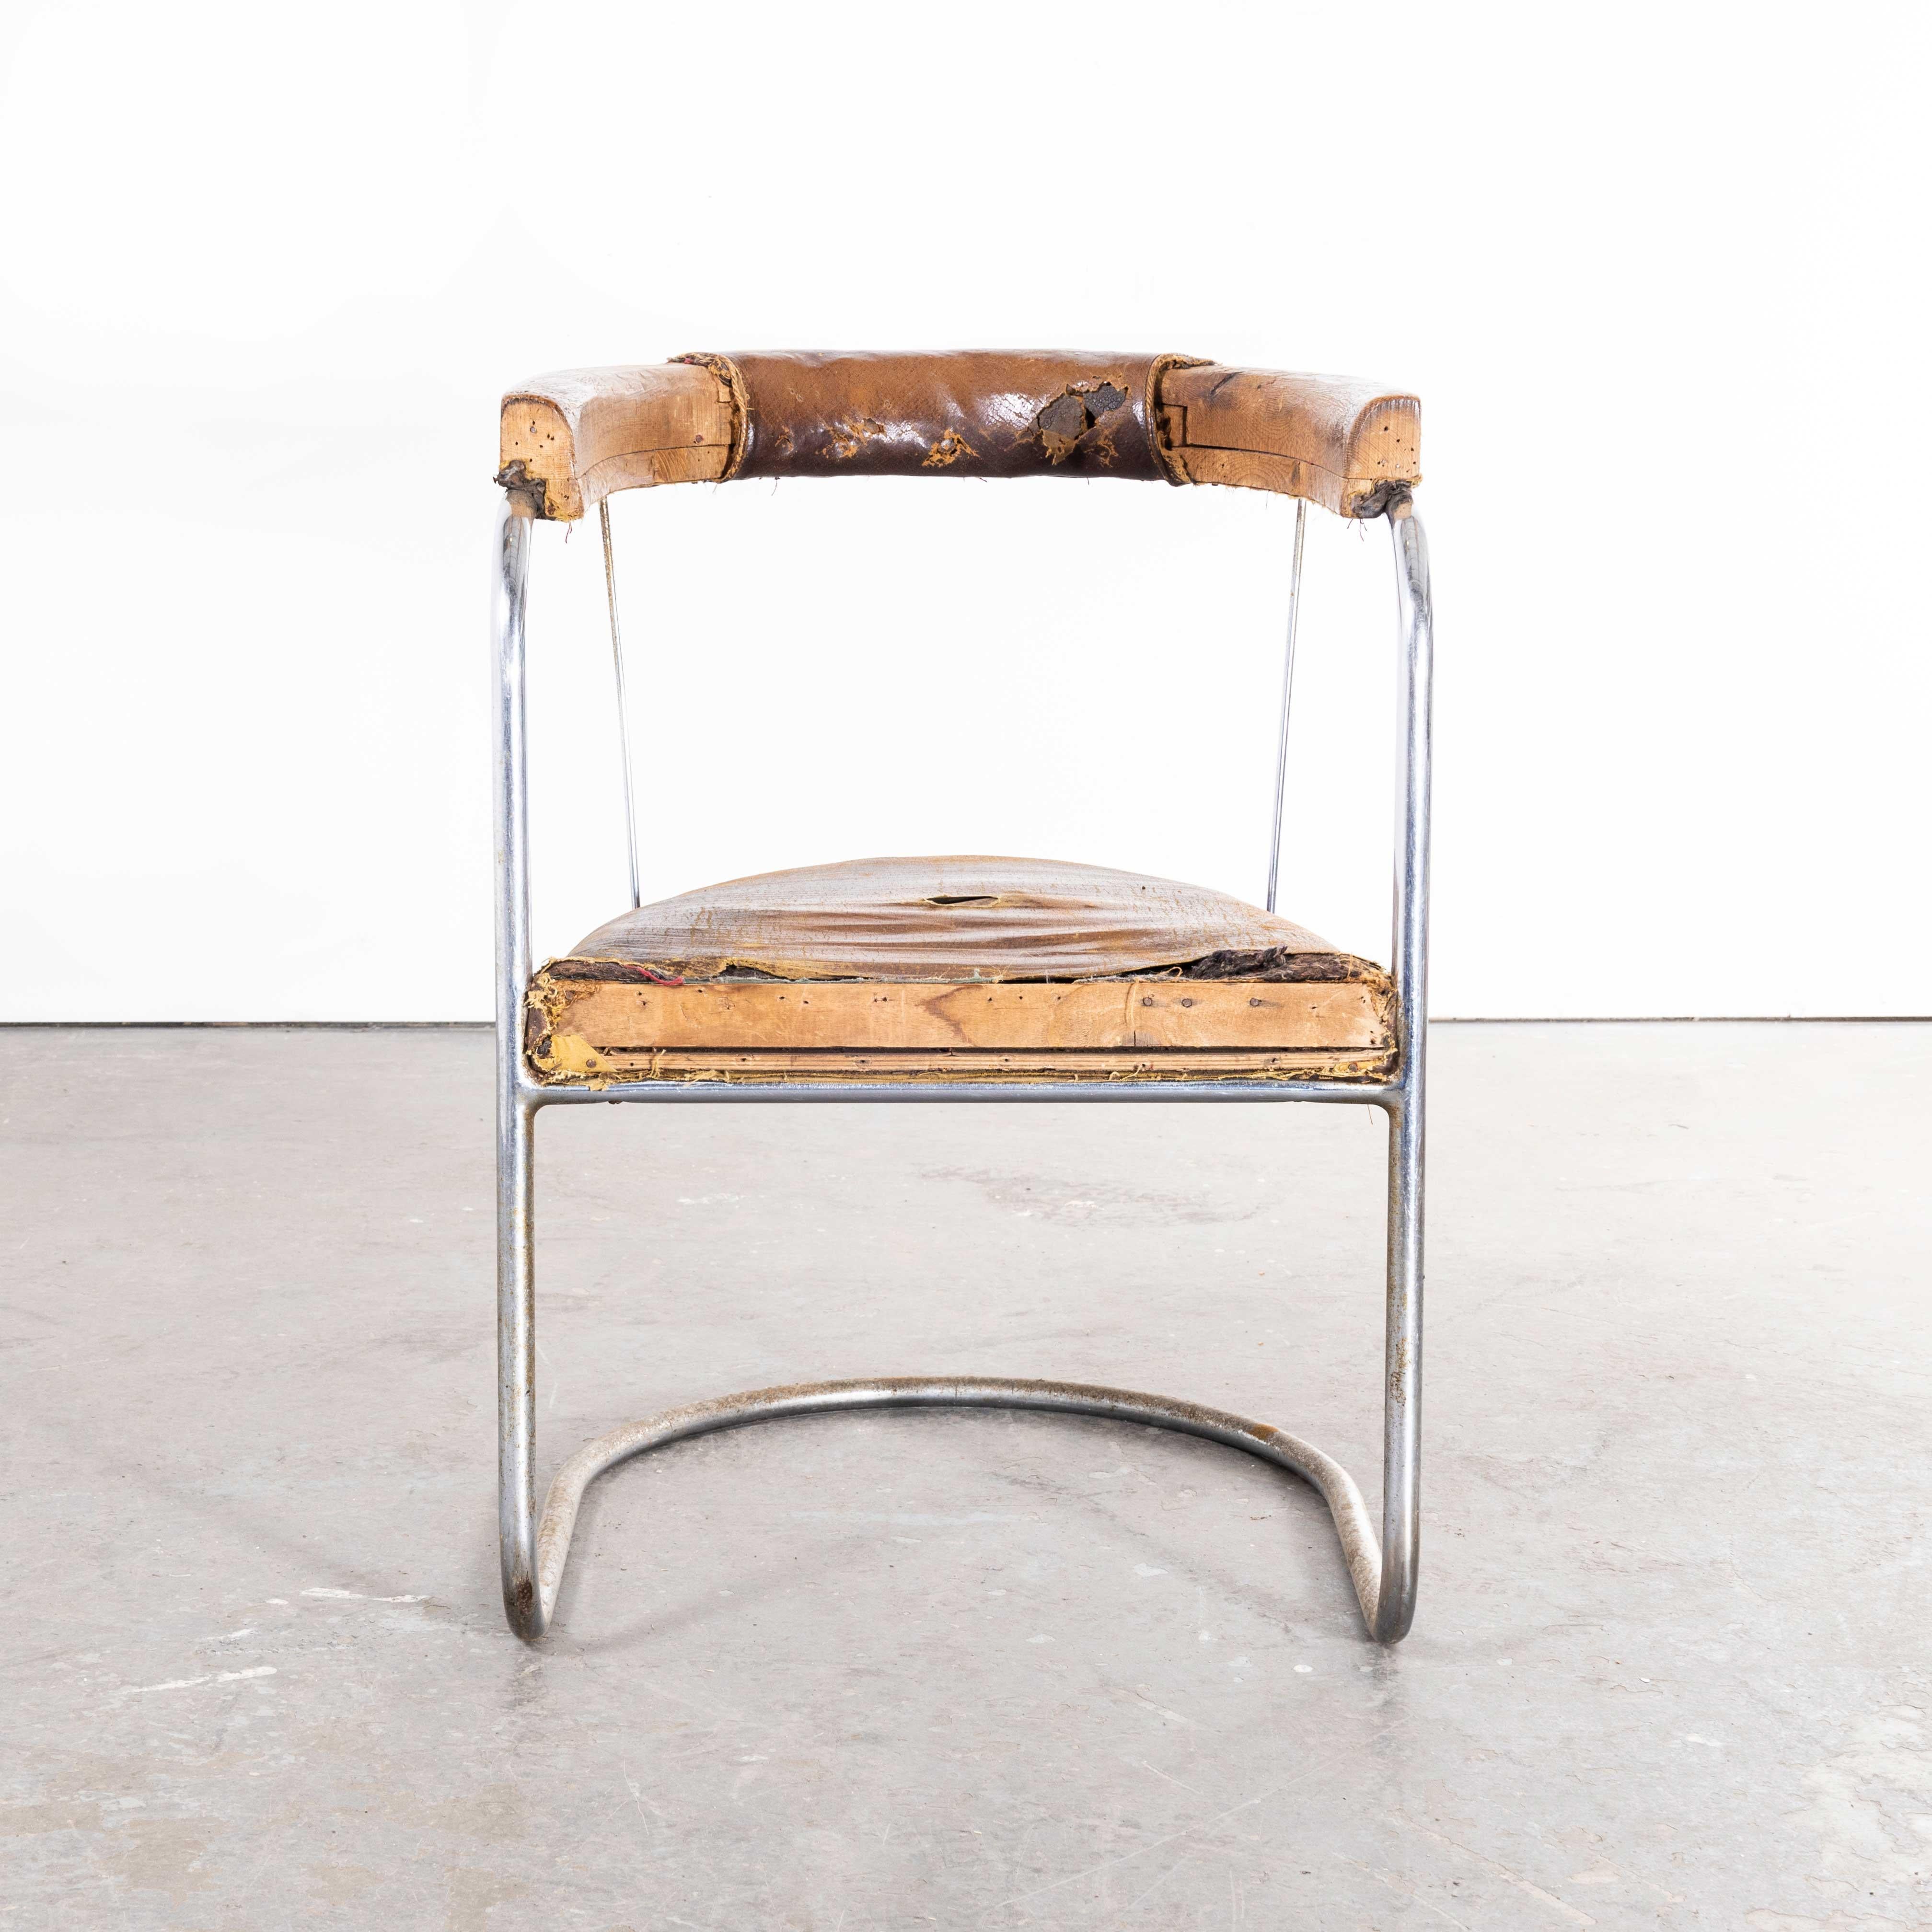 1930s Original Pel Tubular Chrome Sprung Side Chair – Original Leather For Sale 2